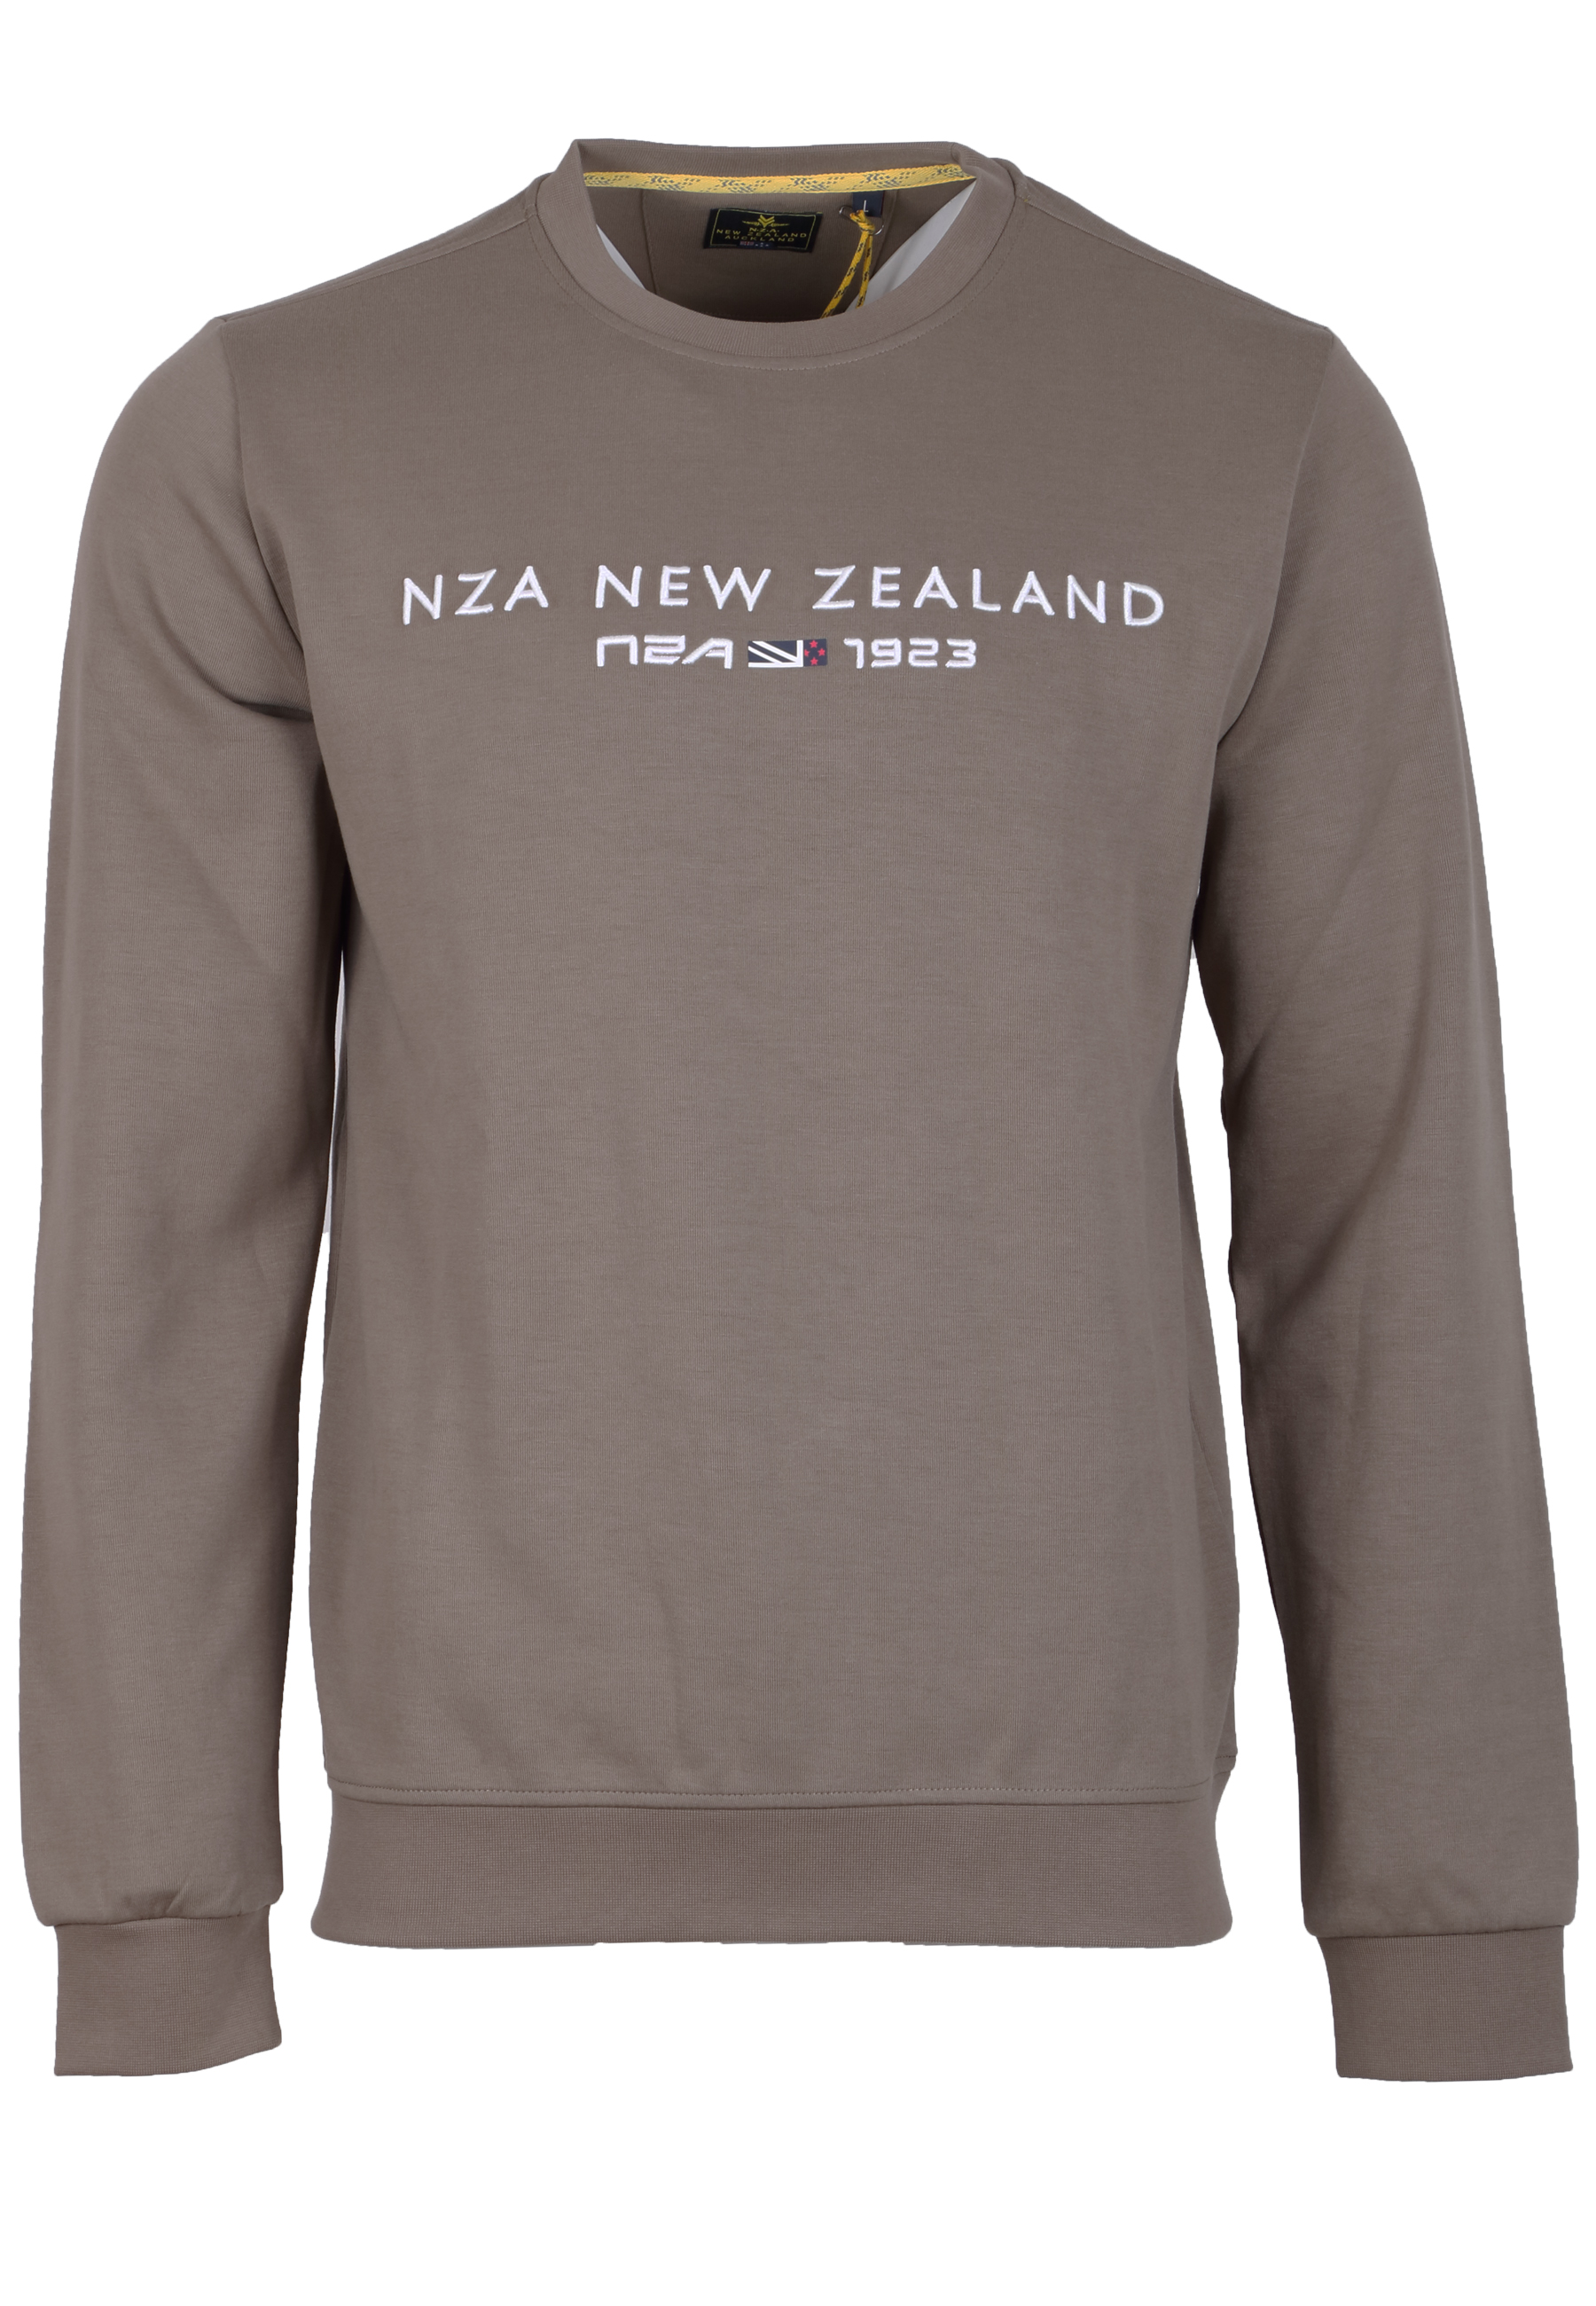 NZA New Zealand Auckland Sweatshirt - army ground